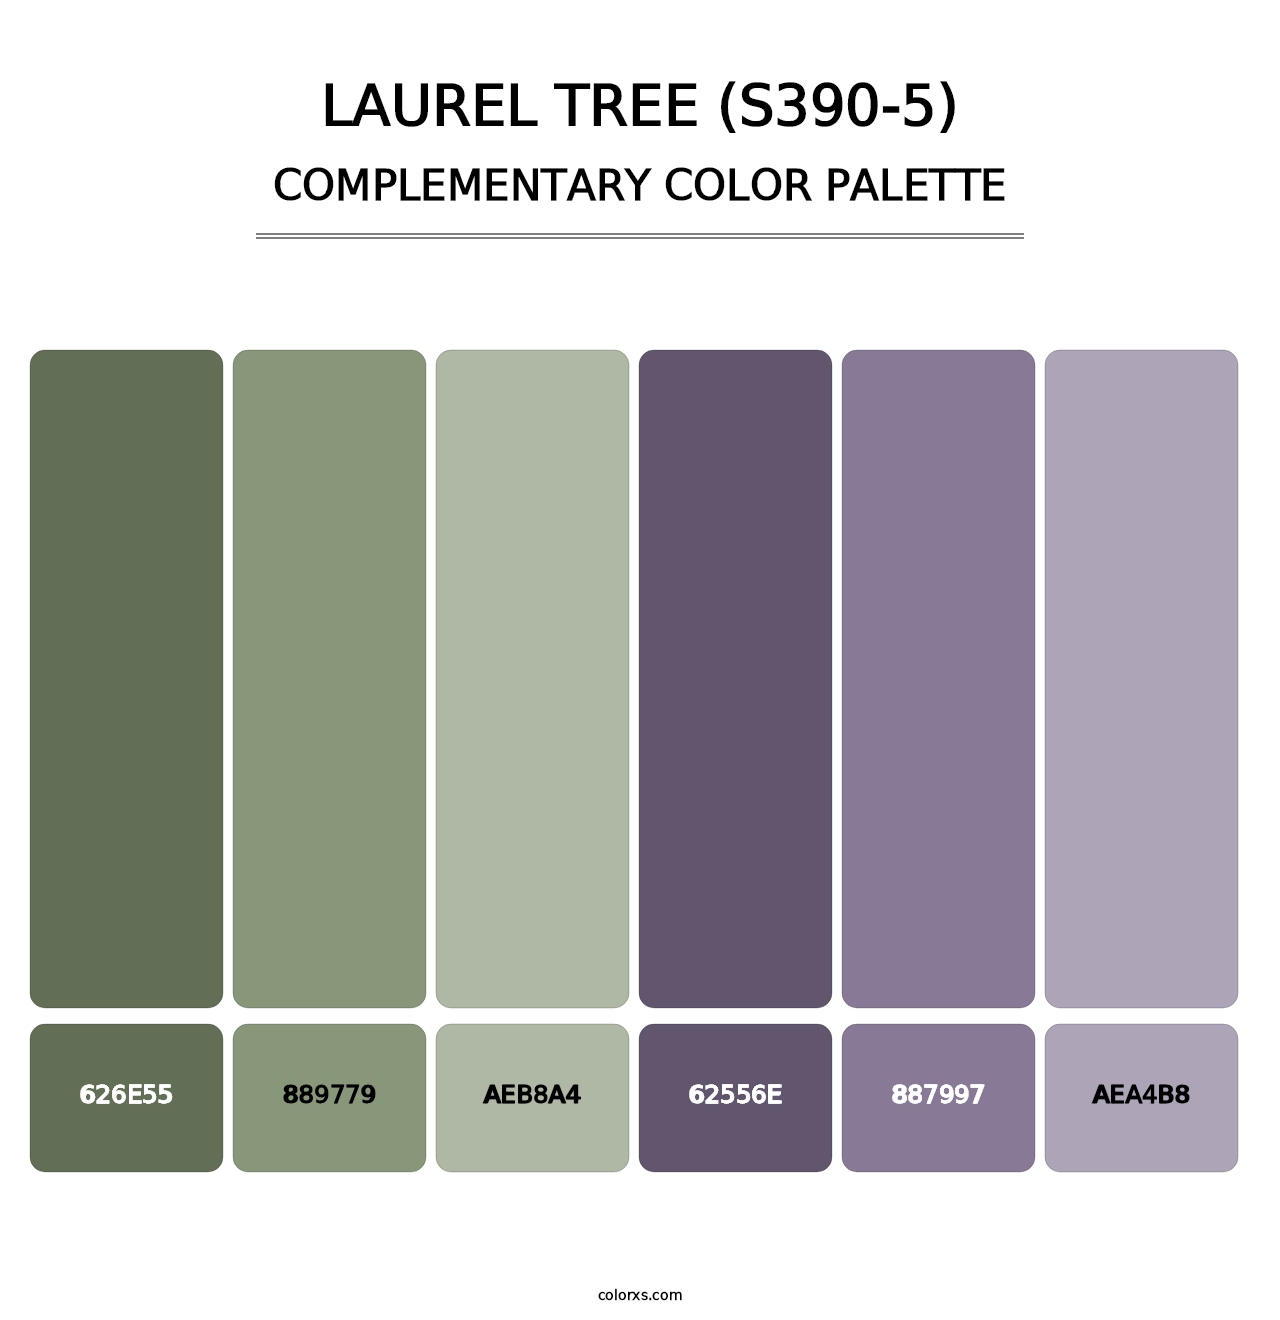 Laurel Tree (S390-5) - Complementary Color Palette